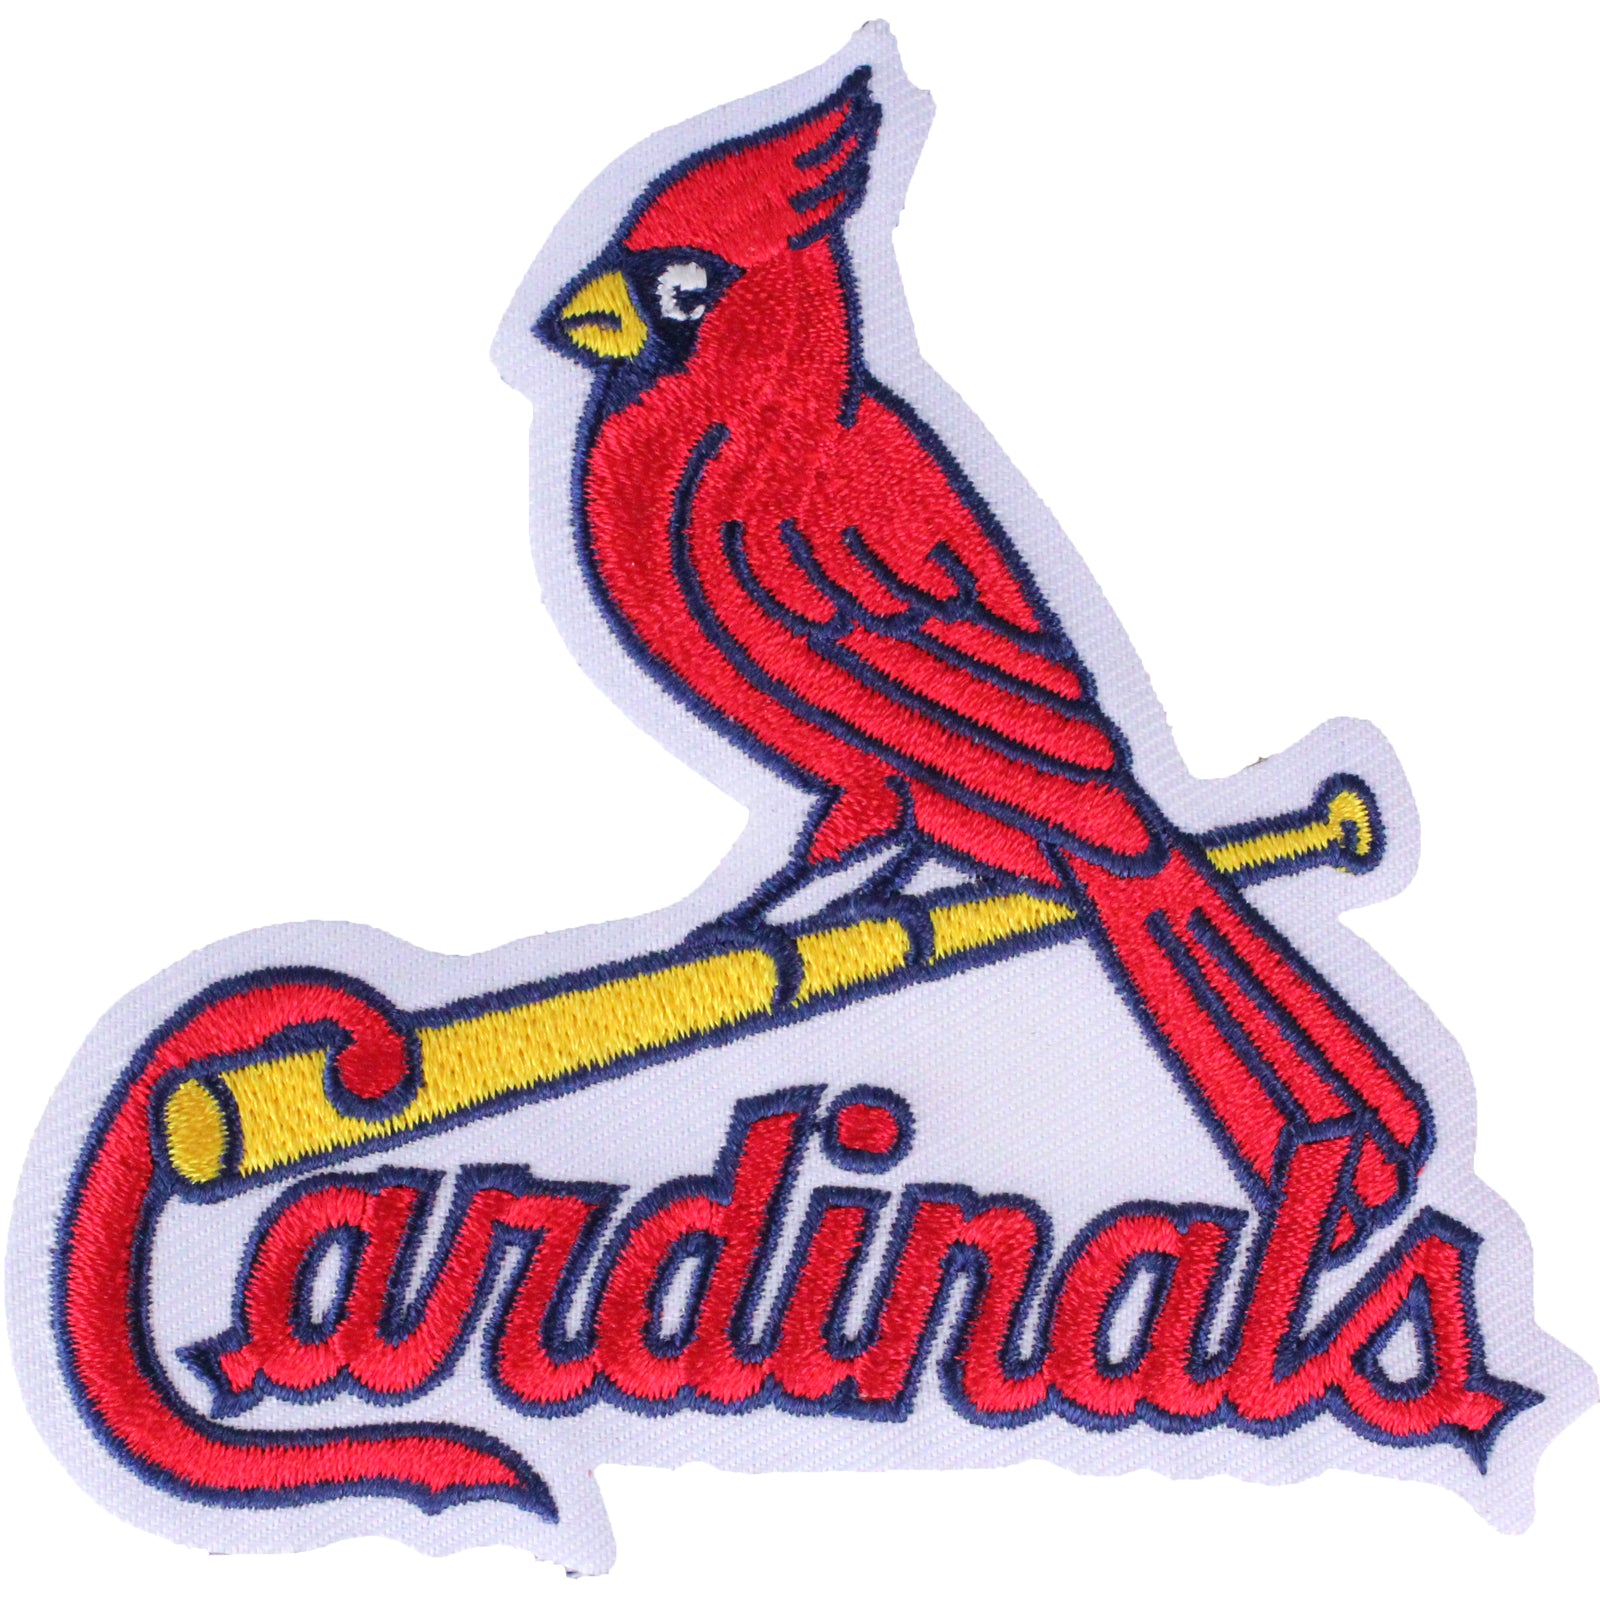 St. Louis Cardinals on X: Want a custom Cardinals jersey? Send us